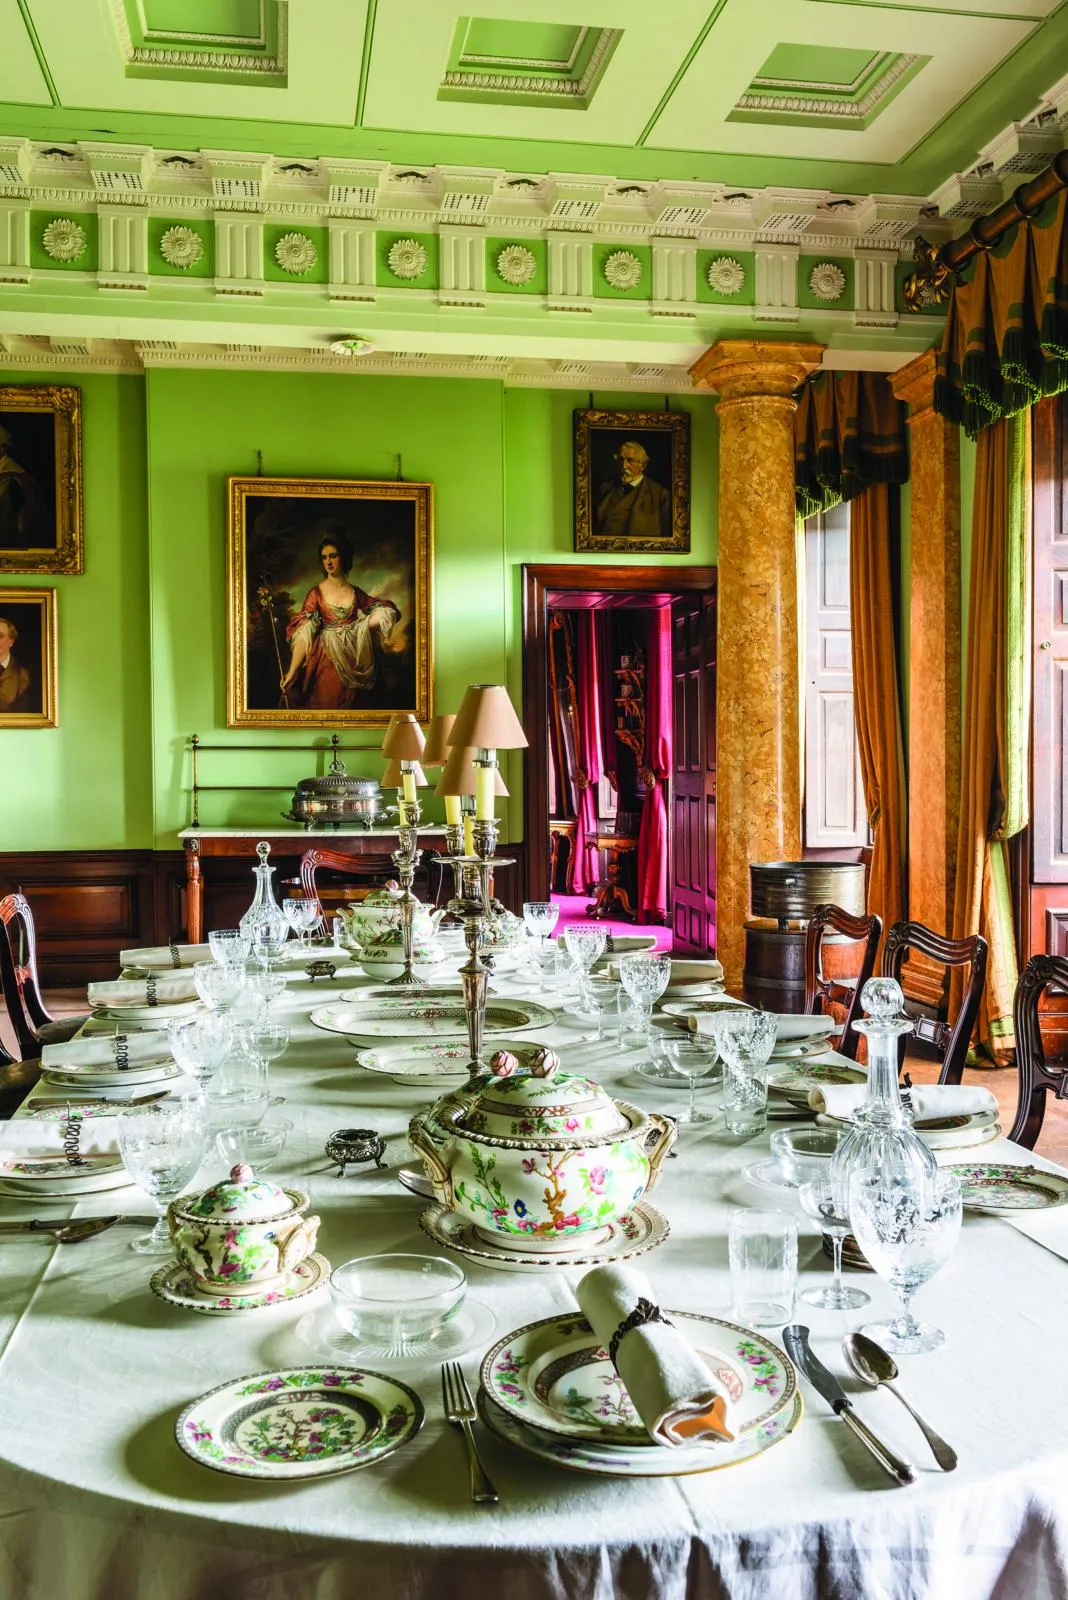 Historic Erddig, the dining room